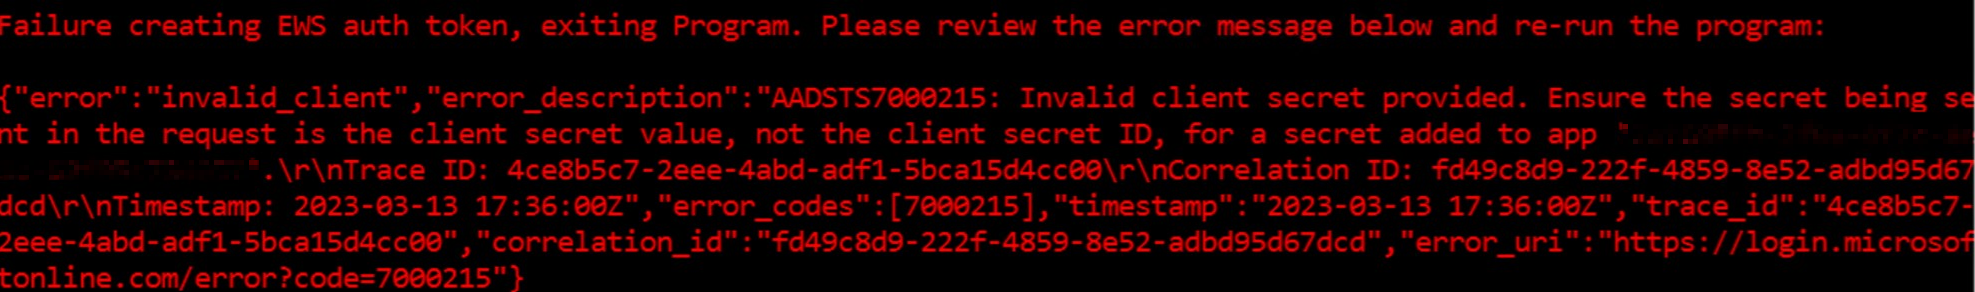 Invalid client secret provided screenshot